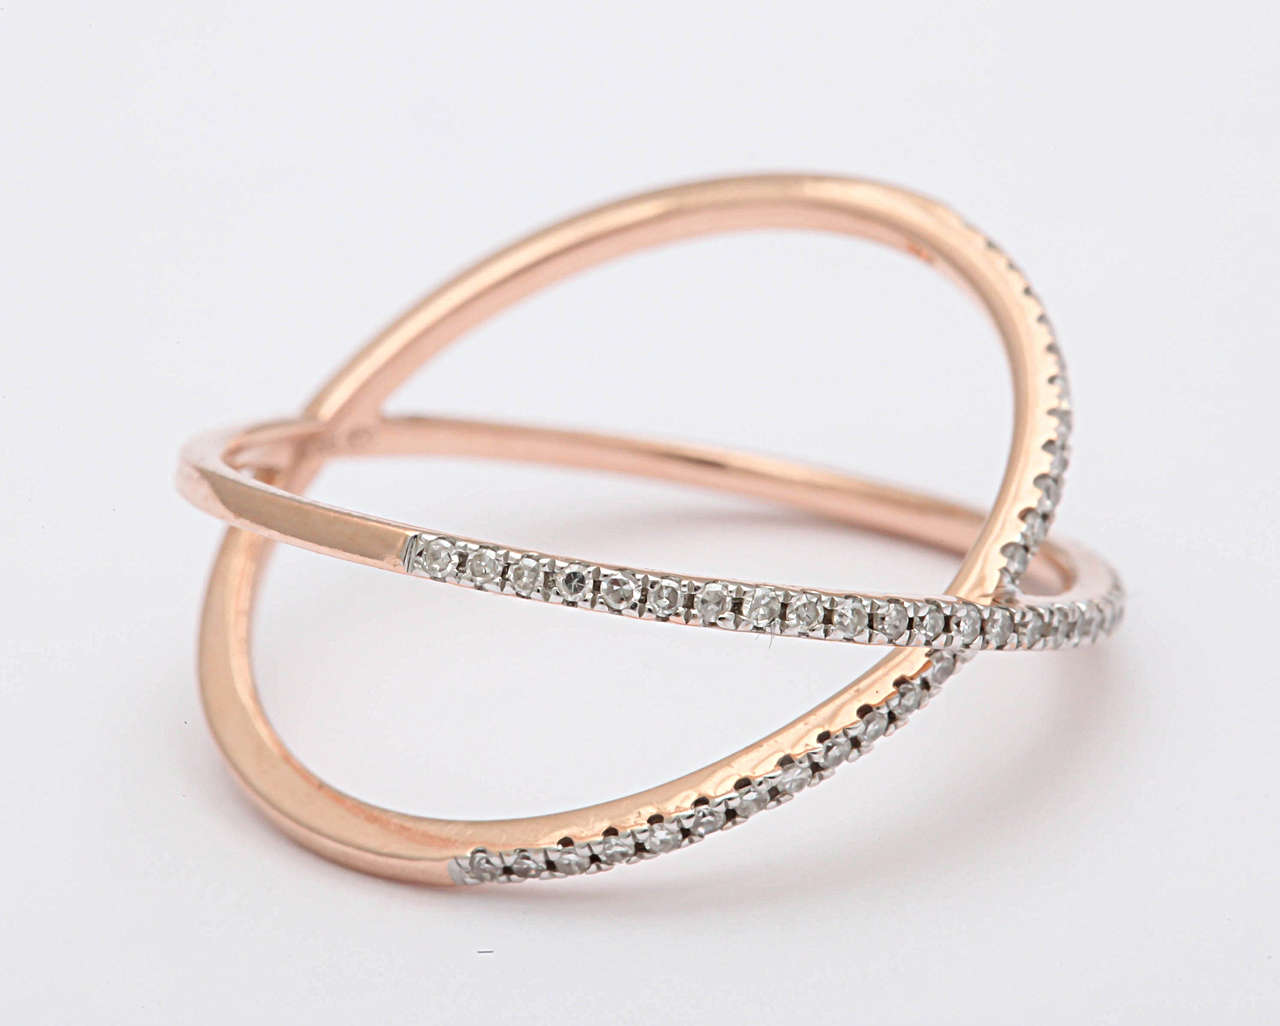 Chic Rose gold diamond 'X' ring, 0.15 carats.